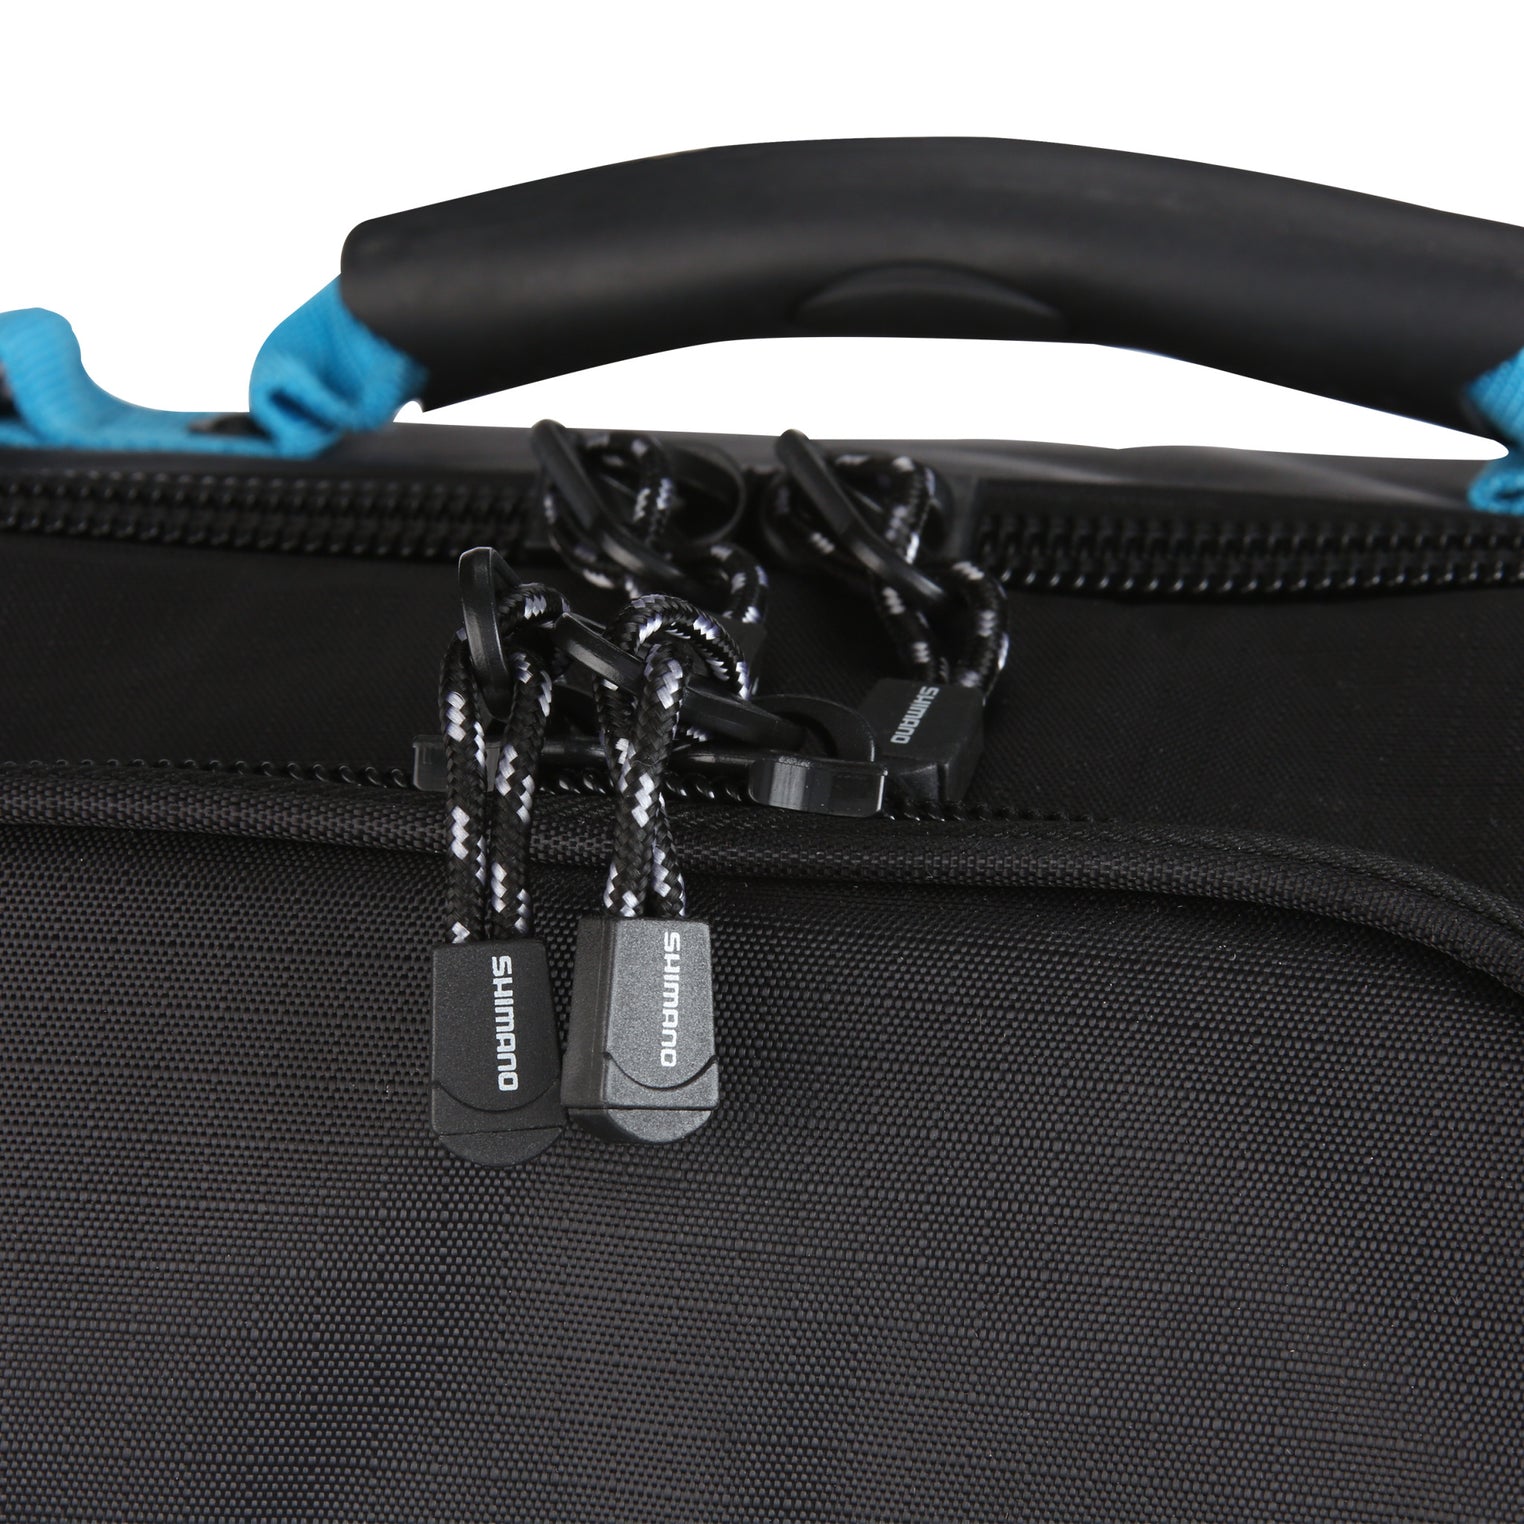 Shimano Blackmoon Backpack Front Load Tackle Backpack - American